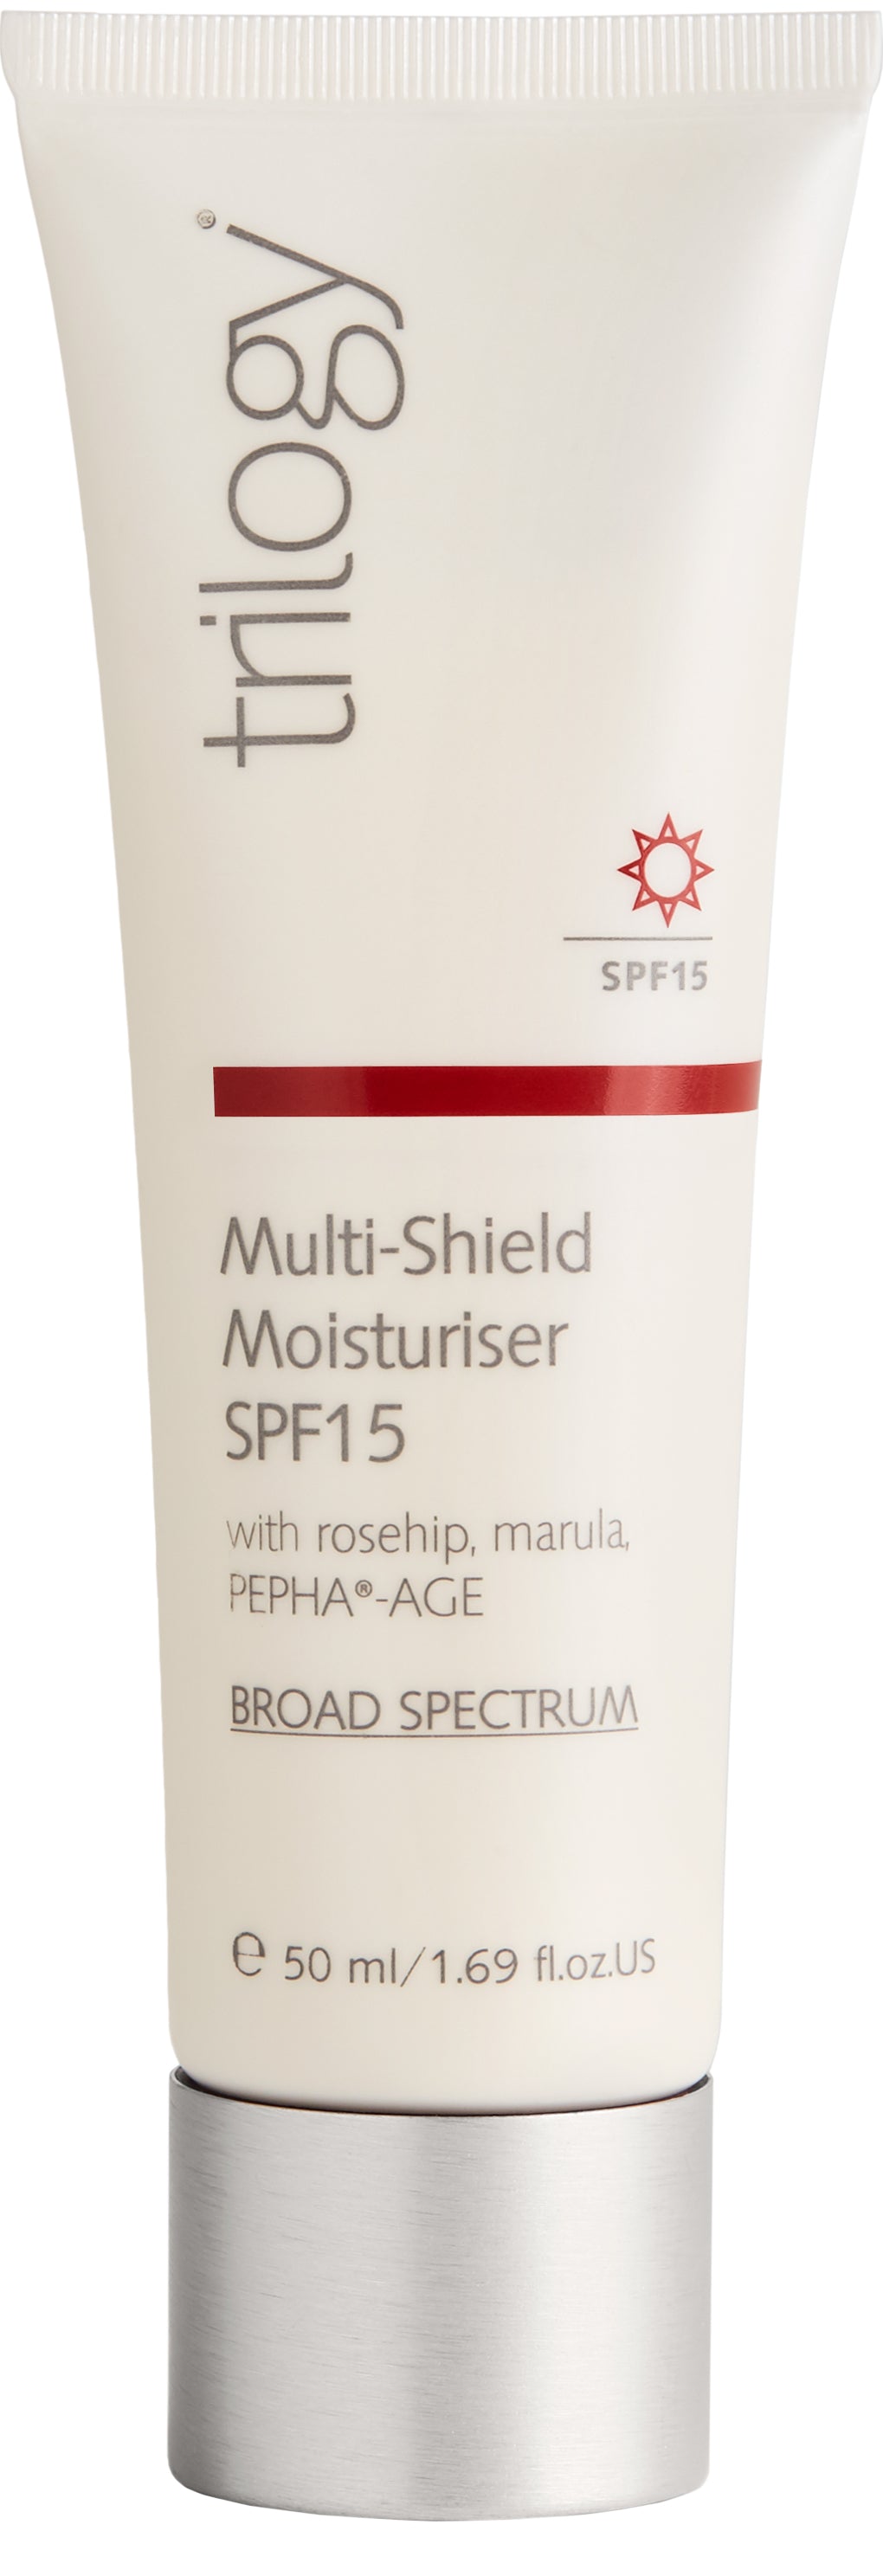 Trilogy multi-shield moisturiser SPF 15, Leahys pharmacy